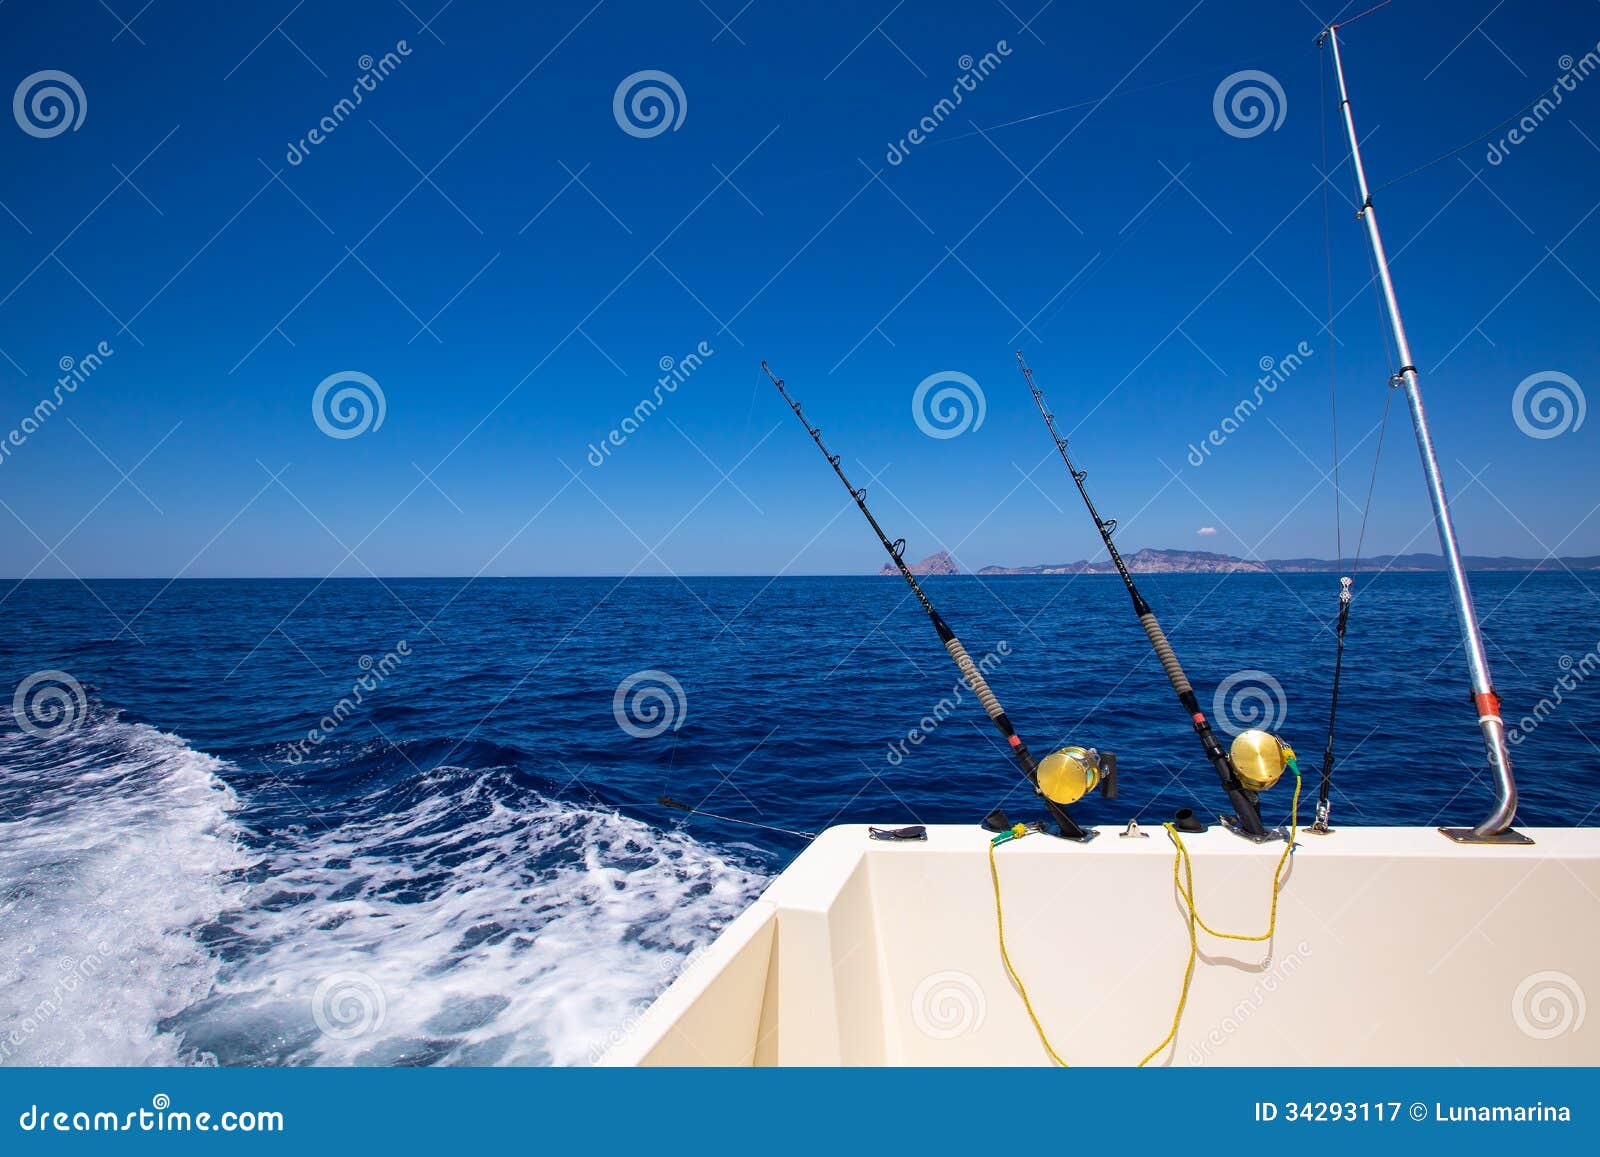 https://thumbs.dreamstime.com/z/ibiza-fishing-boat-trolling-rods-reels-blue-sea-mediterranean-balearic-34293117.jpg